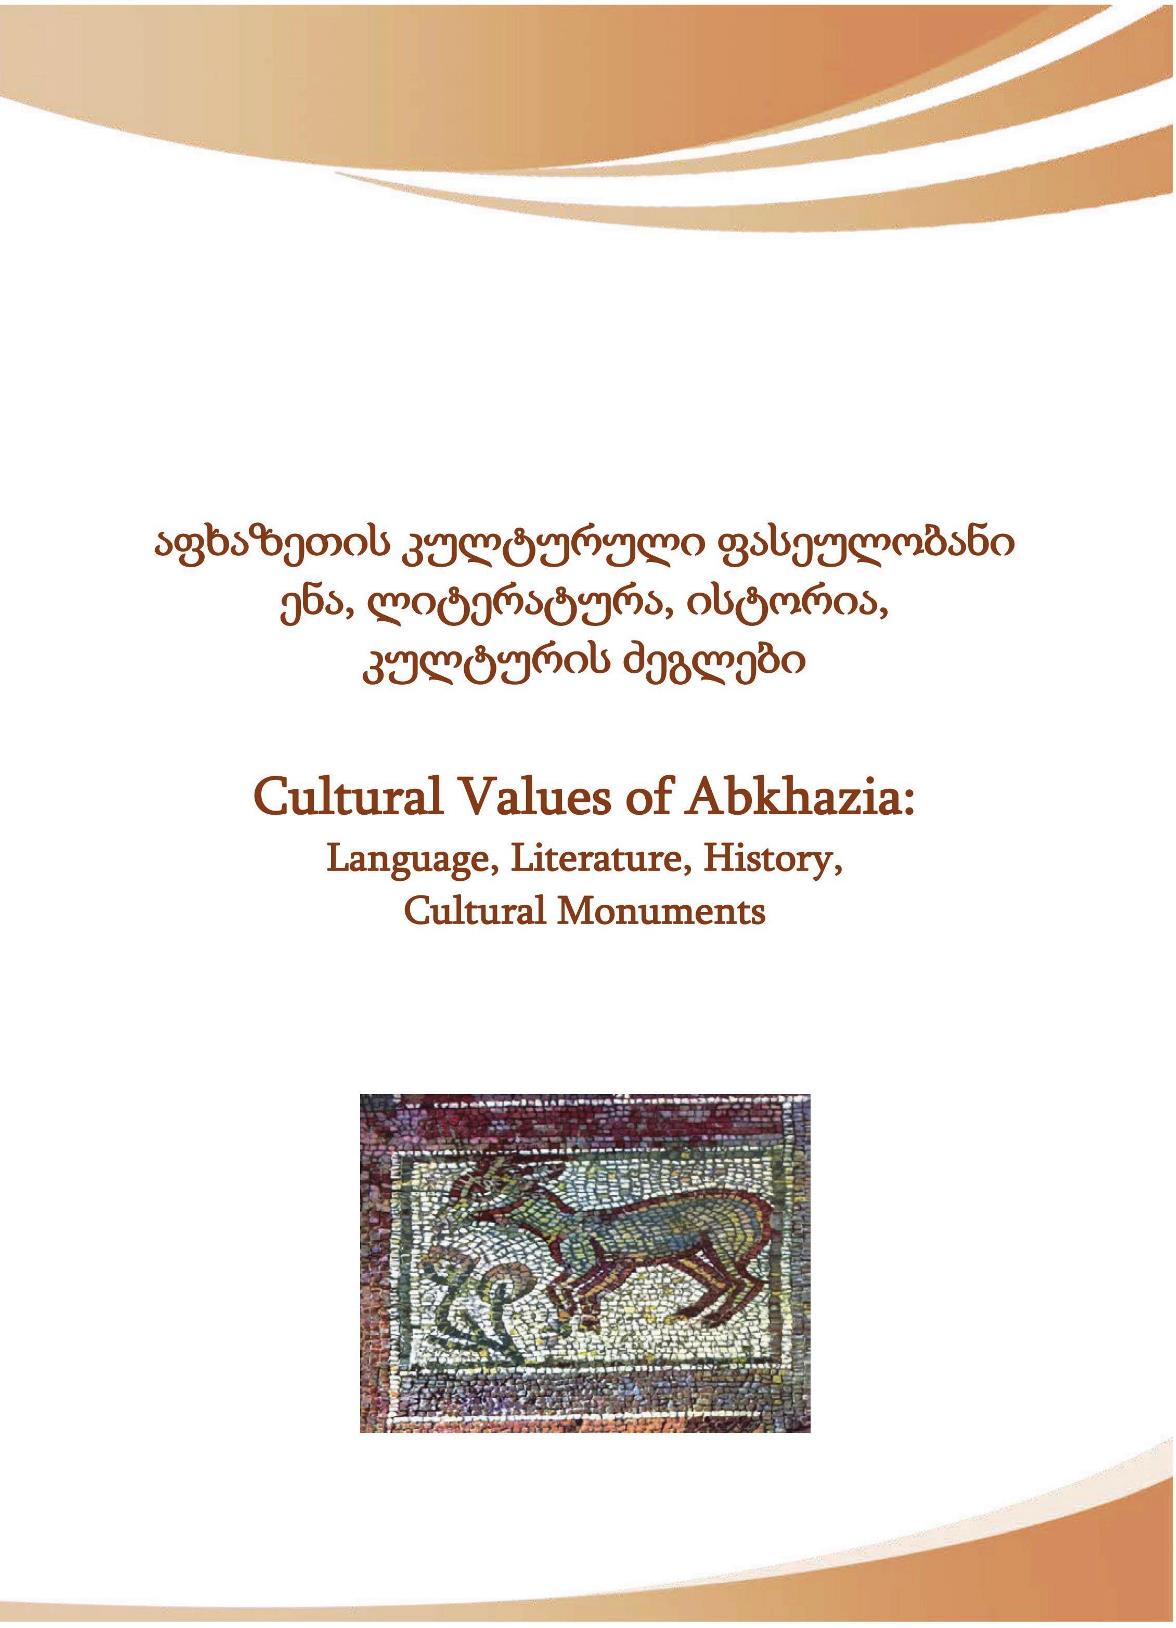 					View 2021: Cultural Values of Abkhazia: Language, Literature, History, Cultural Monuments
				